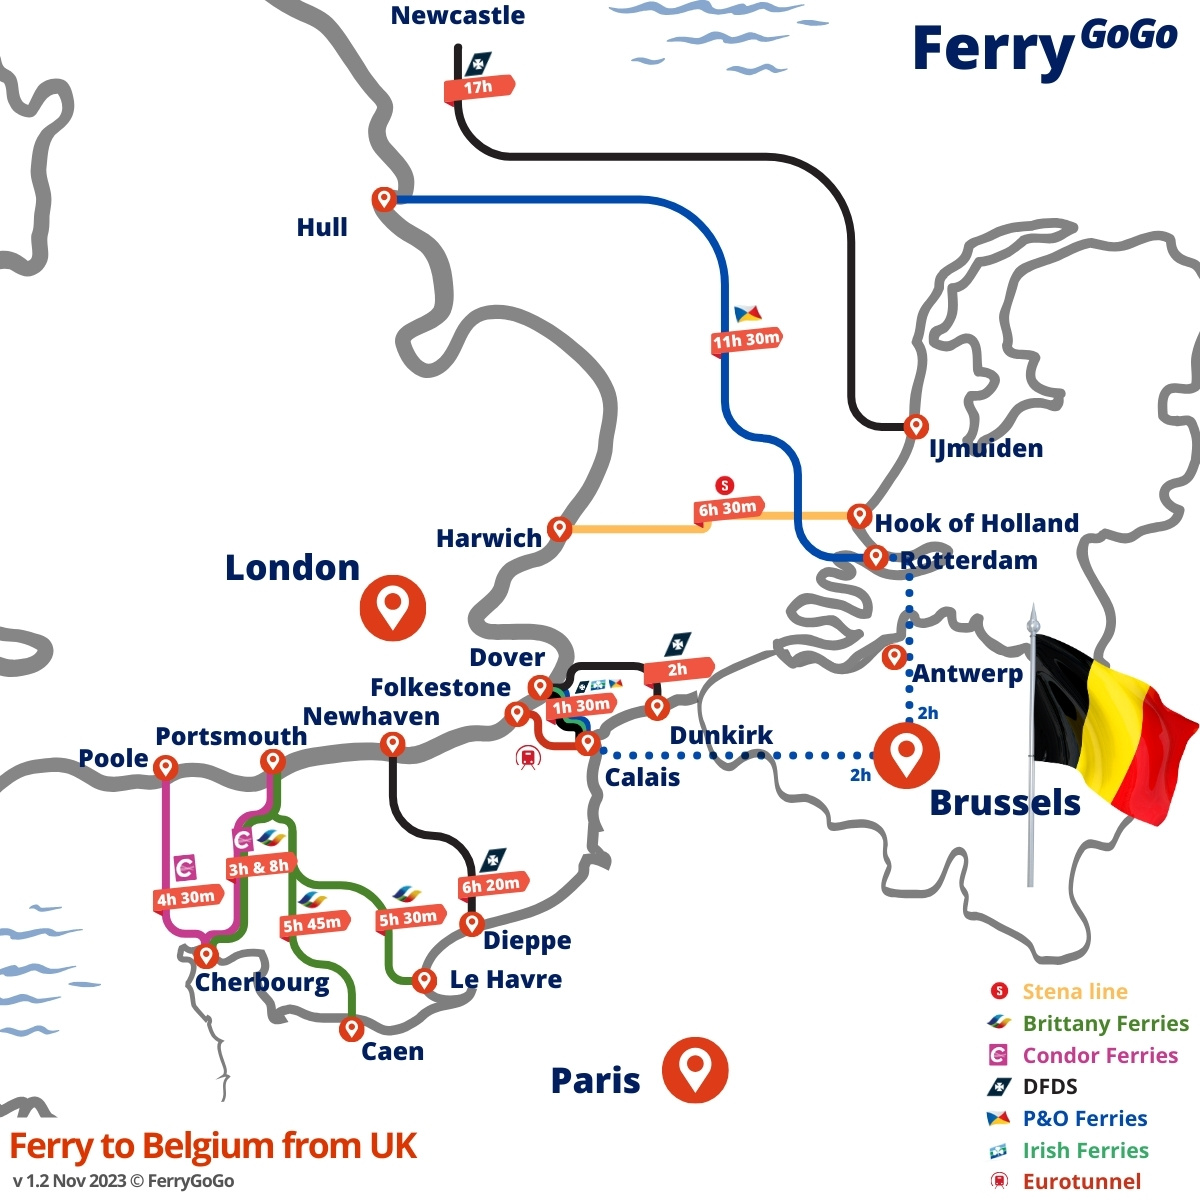 © FerryGoGo.com - Ferry to Belgium Route Map; Last Update: November 2023 v2